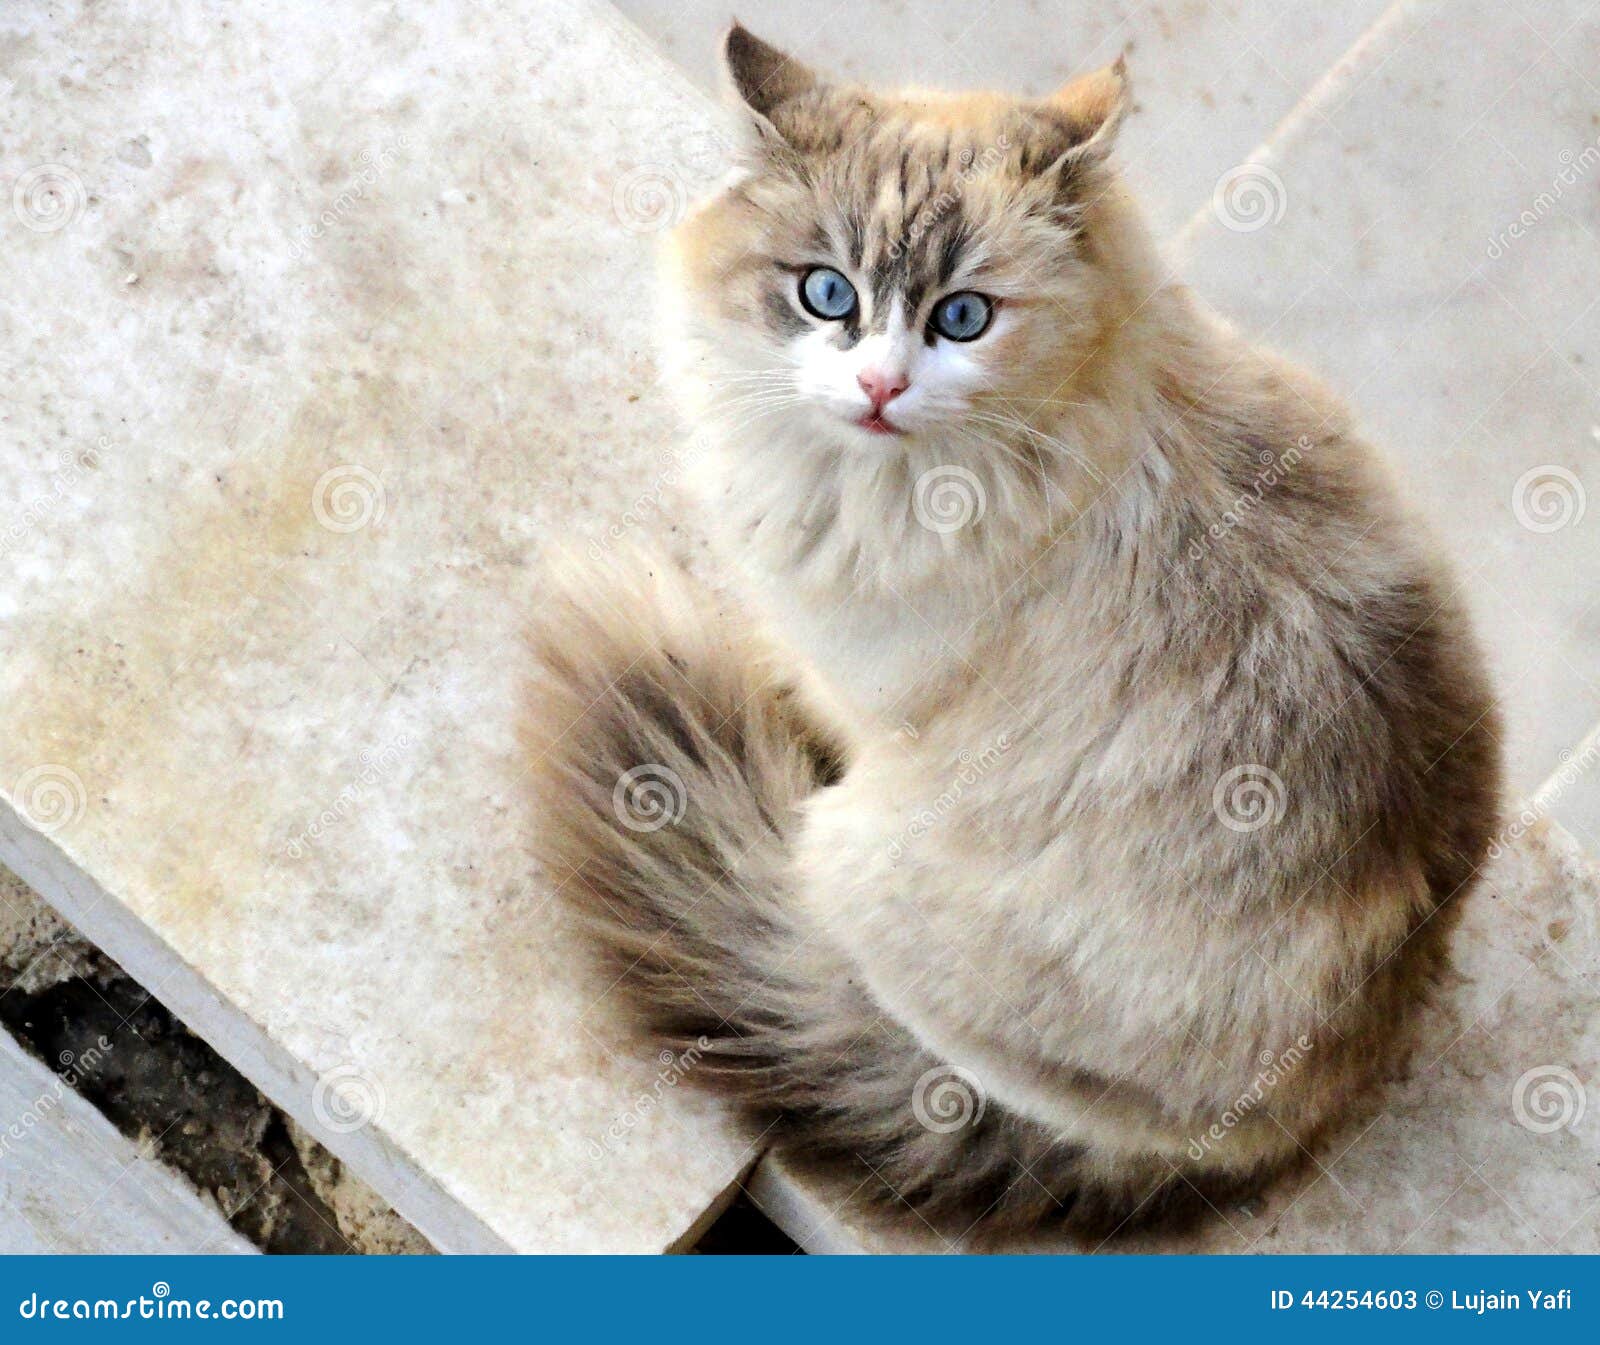 Blue eyes cat editorial stock photo. Image of eyes, beauty - 44254603